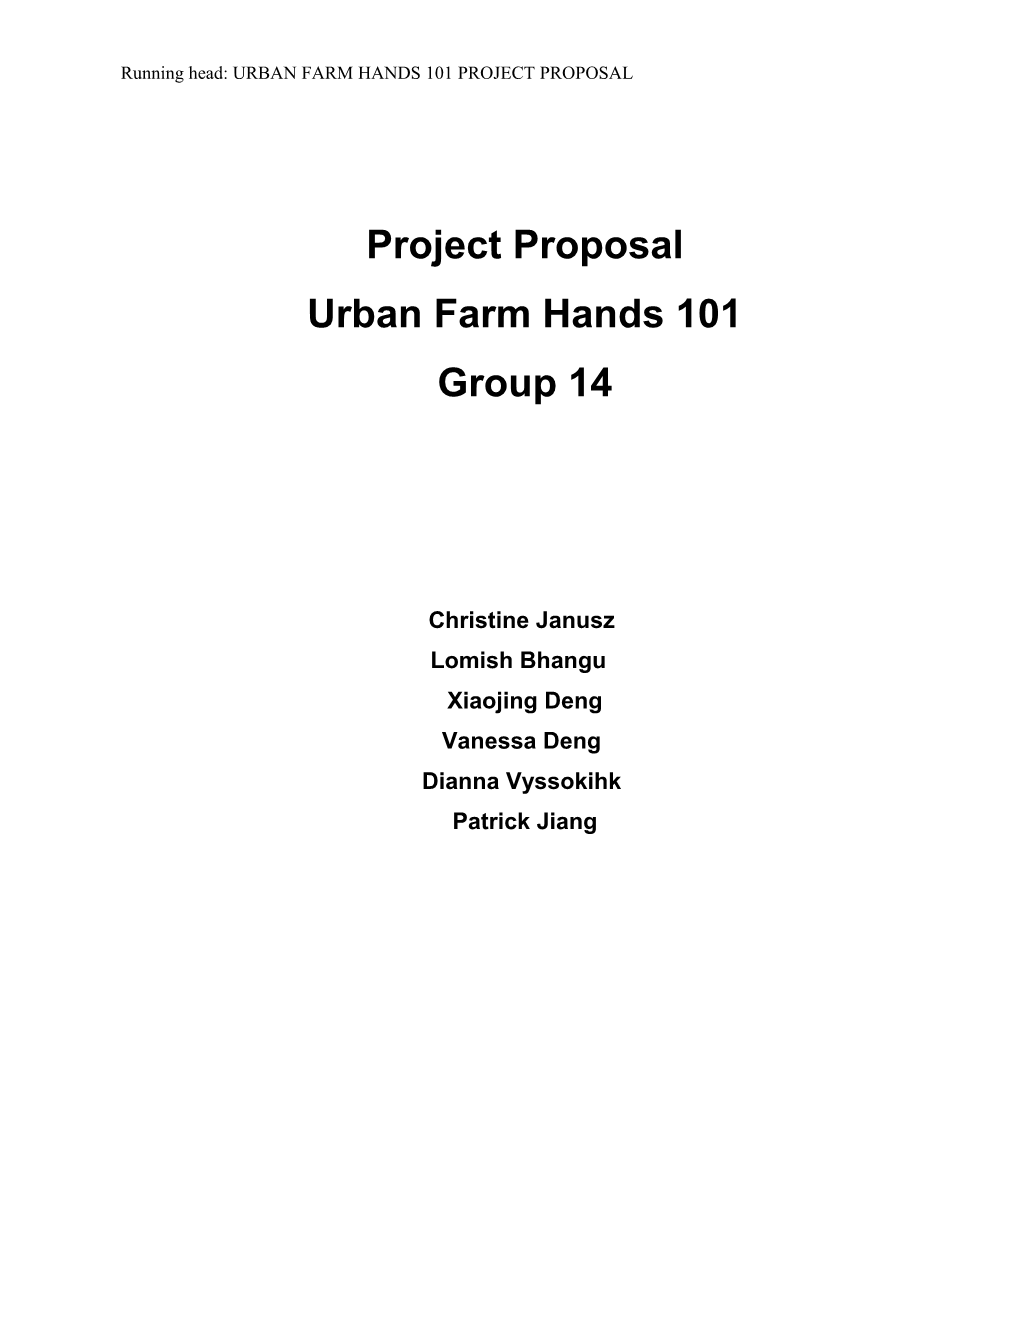 Urban Farm Hands 101 Project Proposal